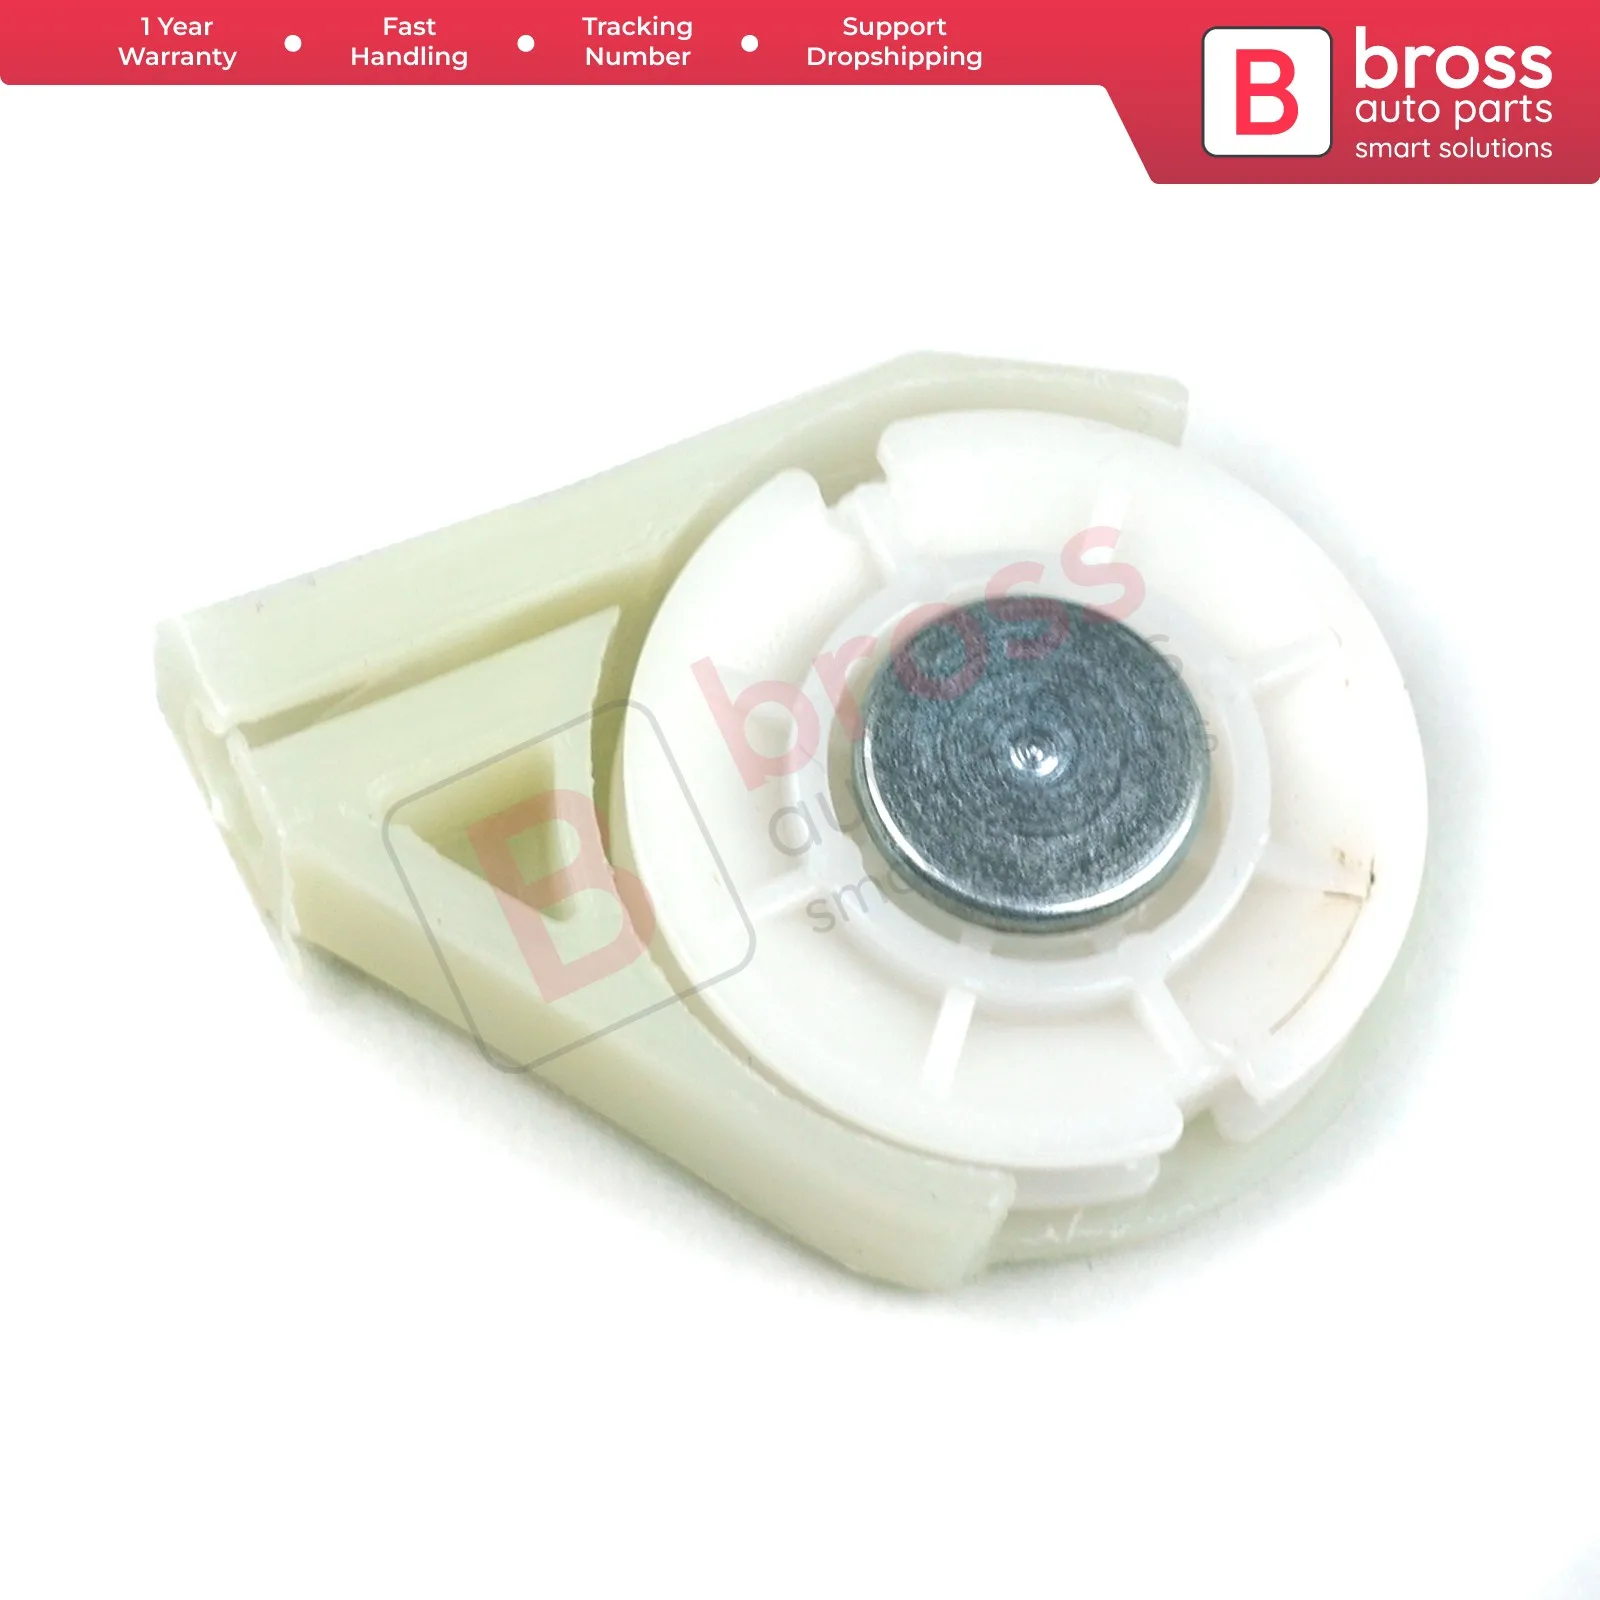 

Bross Auto Parts BWR1068 Electrical Power Window Regulator Corner Wheel Kit for Mercedes Vito Left Fast Shipment Made in Turkey